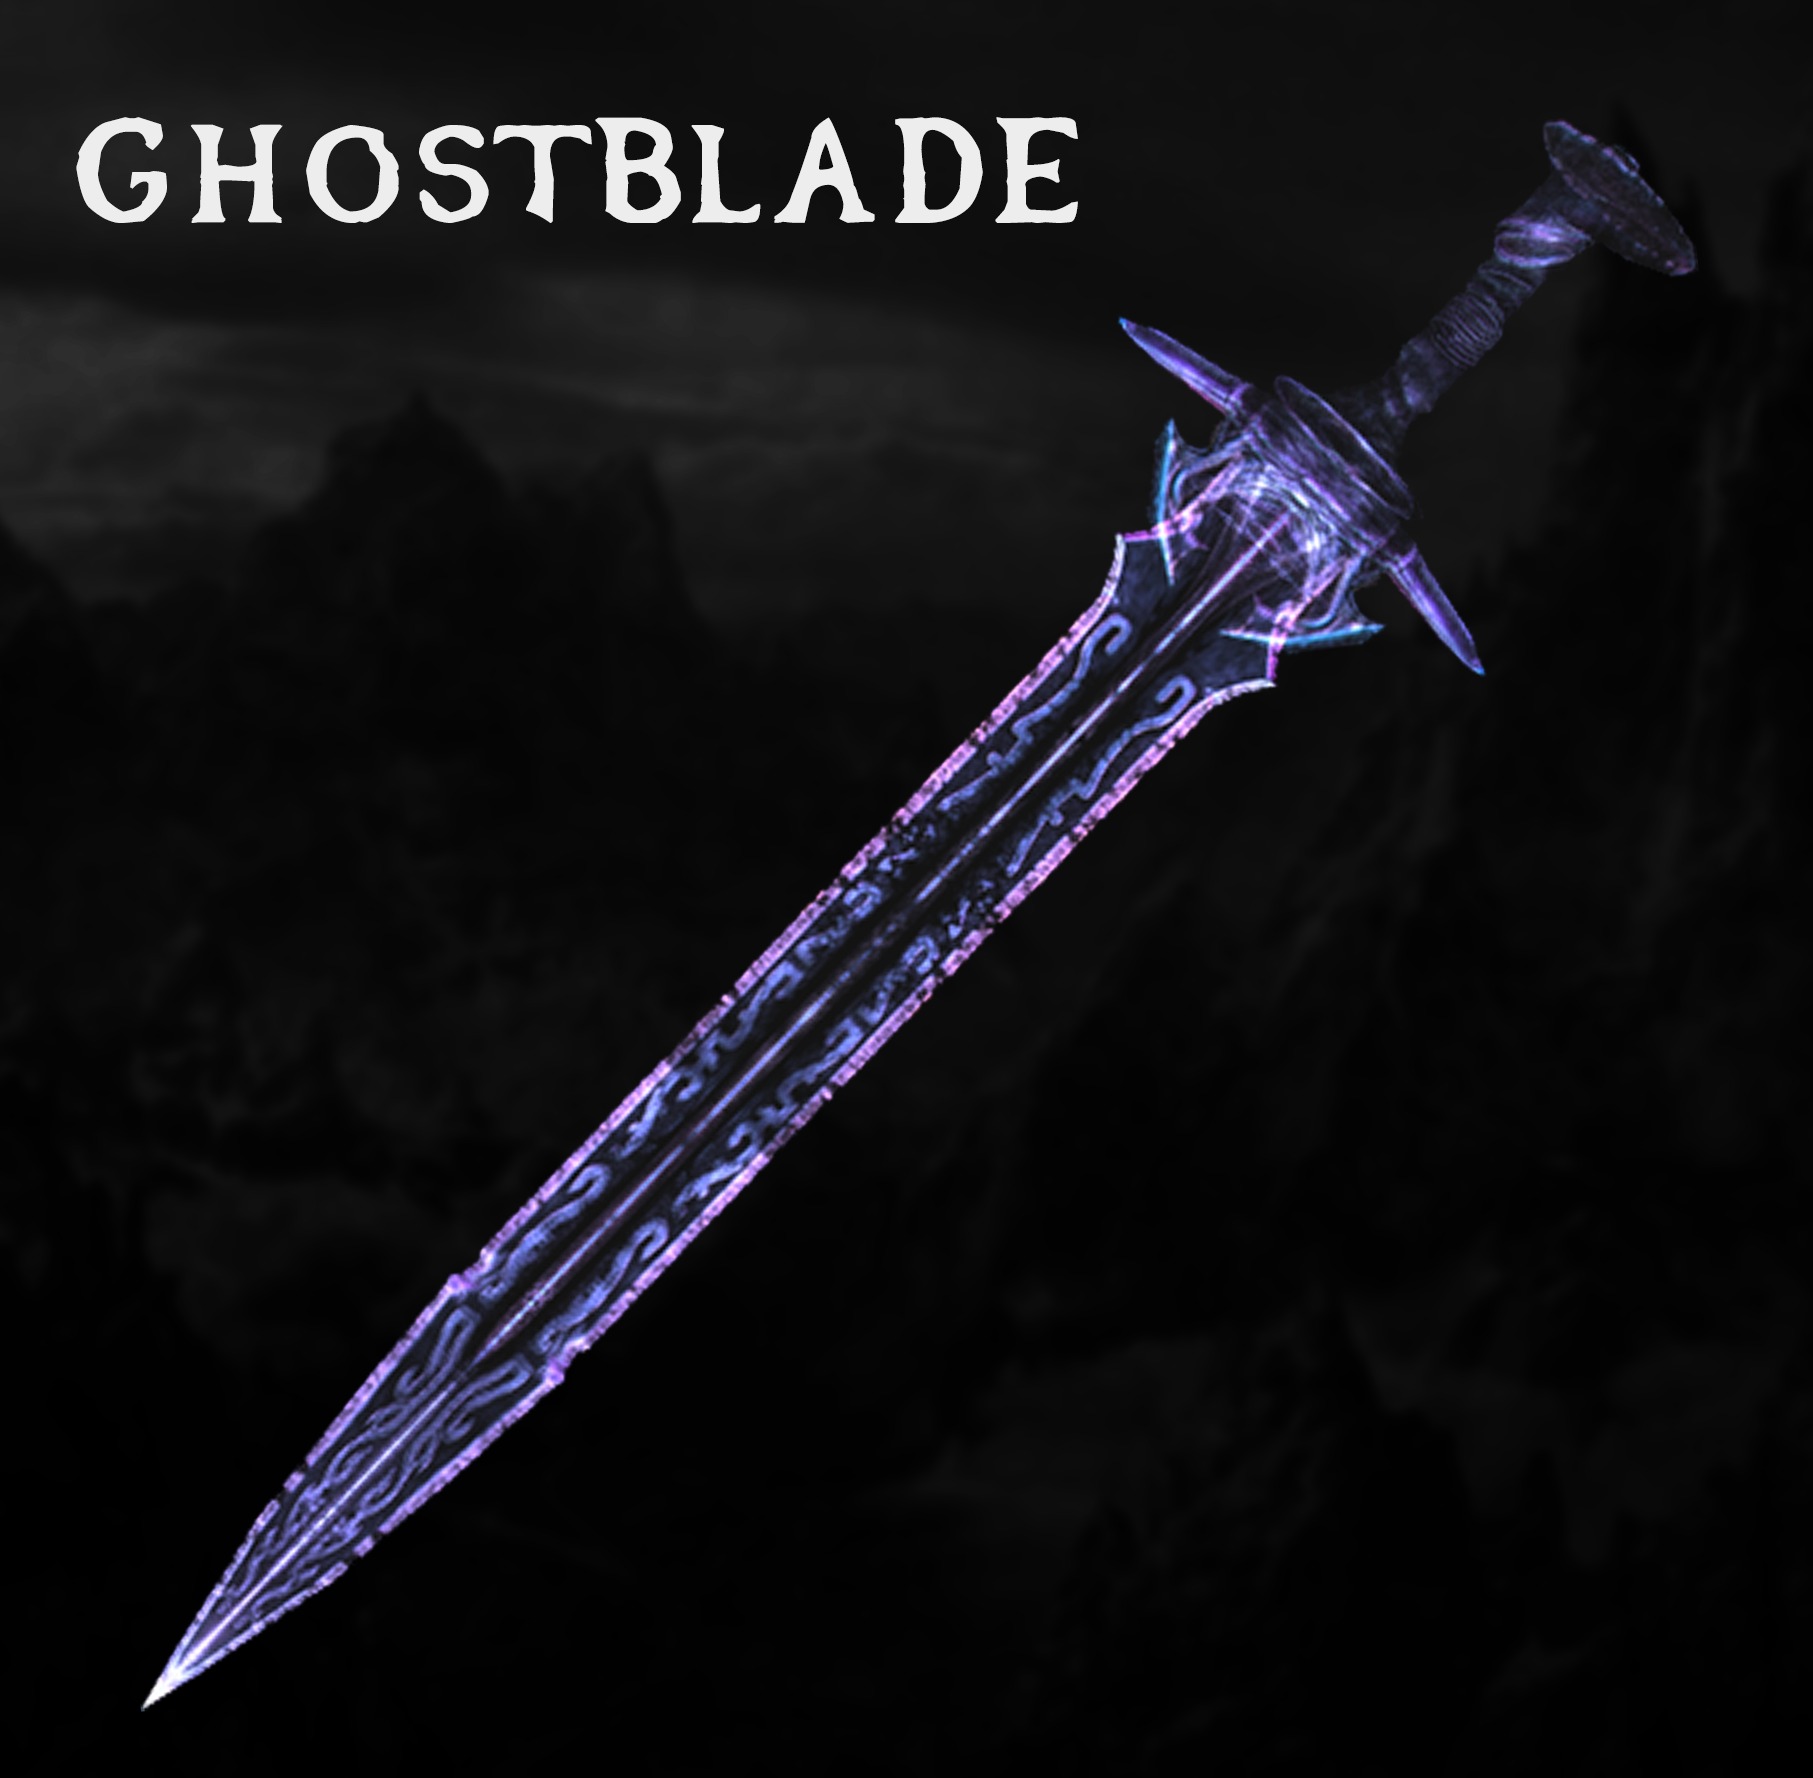 Ghostblade Ansilvund S Echo 武器 Skyrim Special Edition Mod データベース Mod紹介 まとめサイト